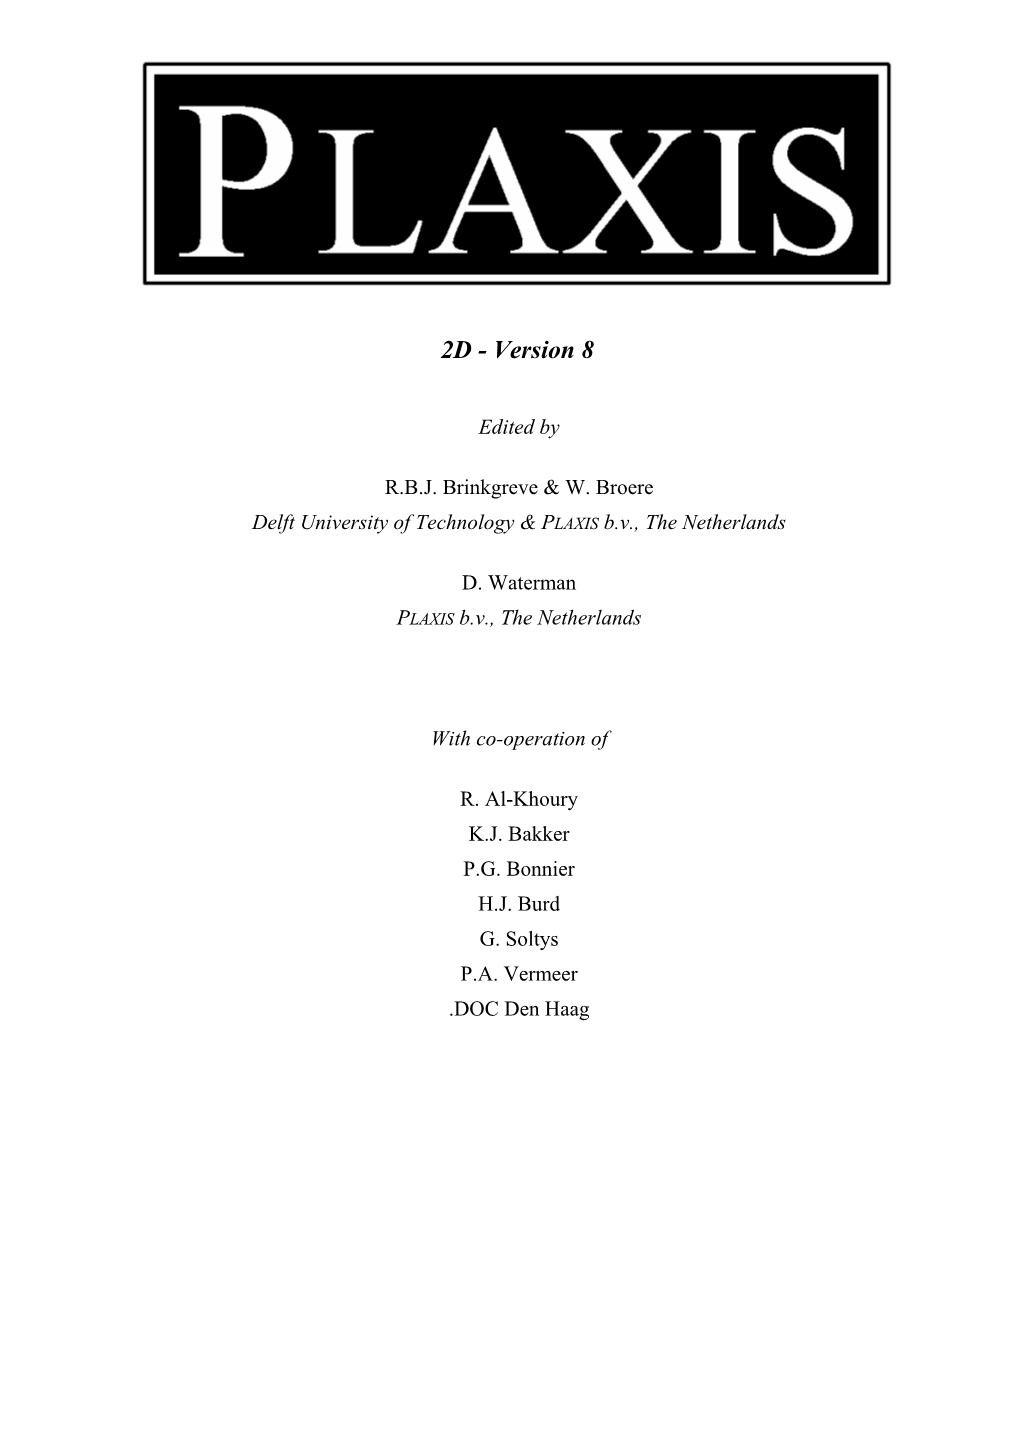 PLAXIS V8 General Information